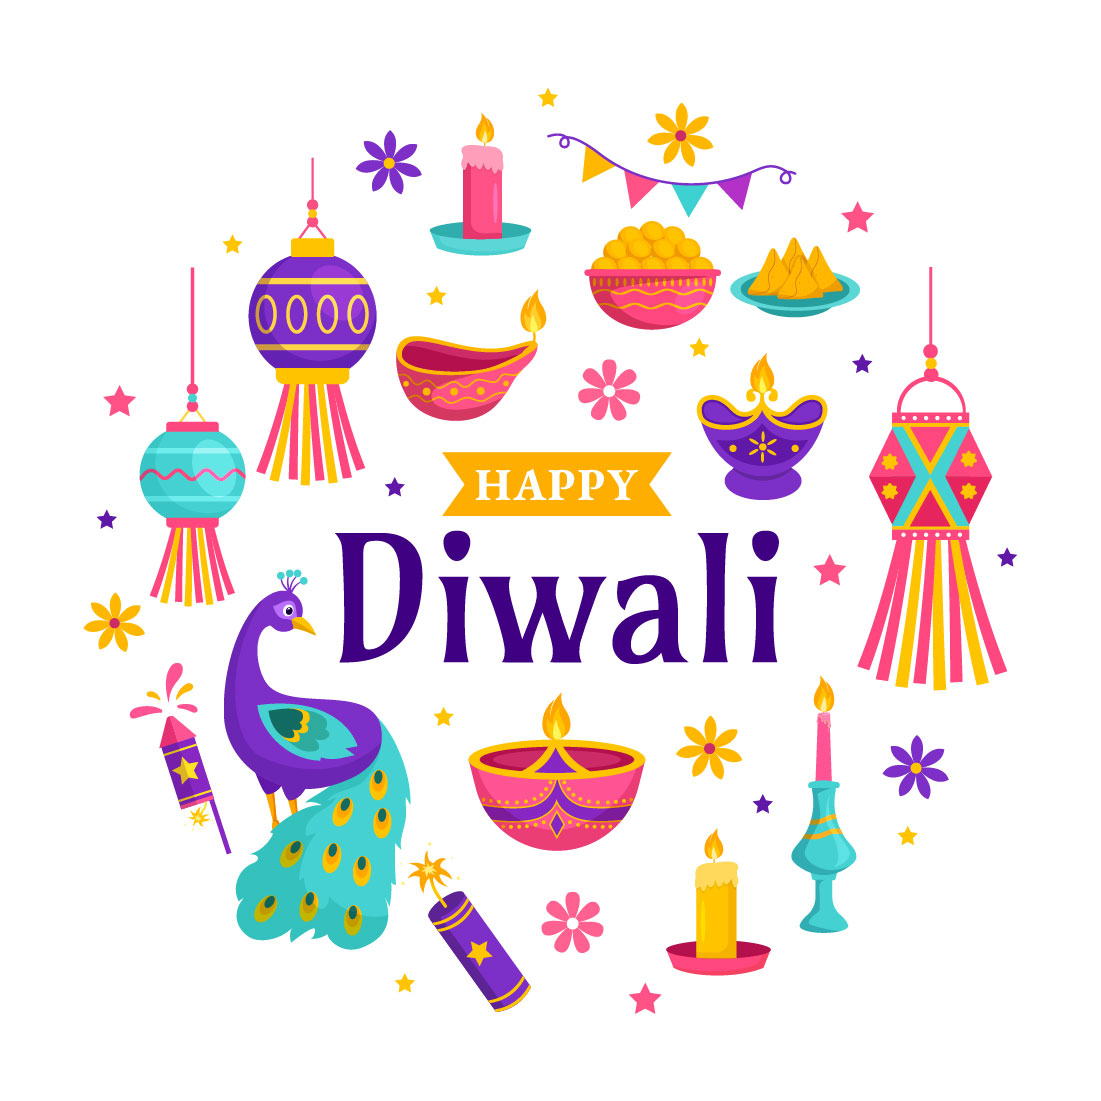 14 Happy Diwali Hindu Illustration preview image.